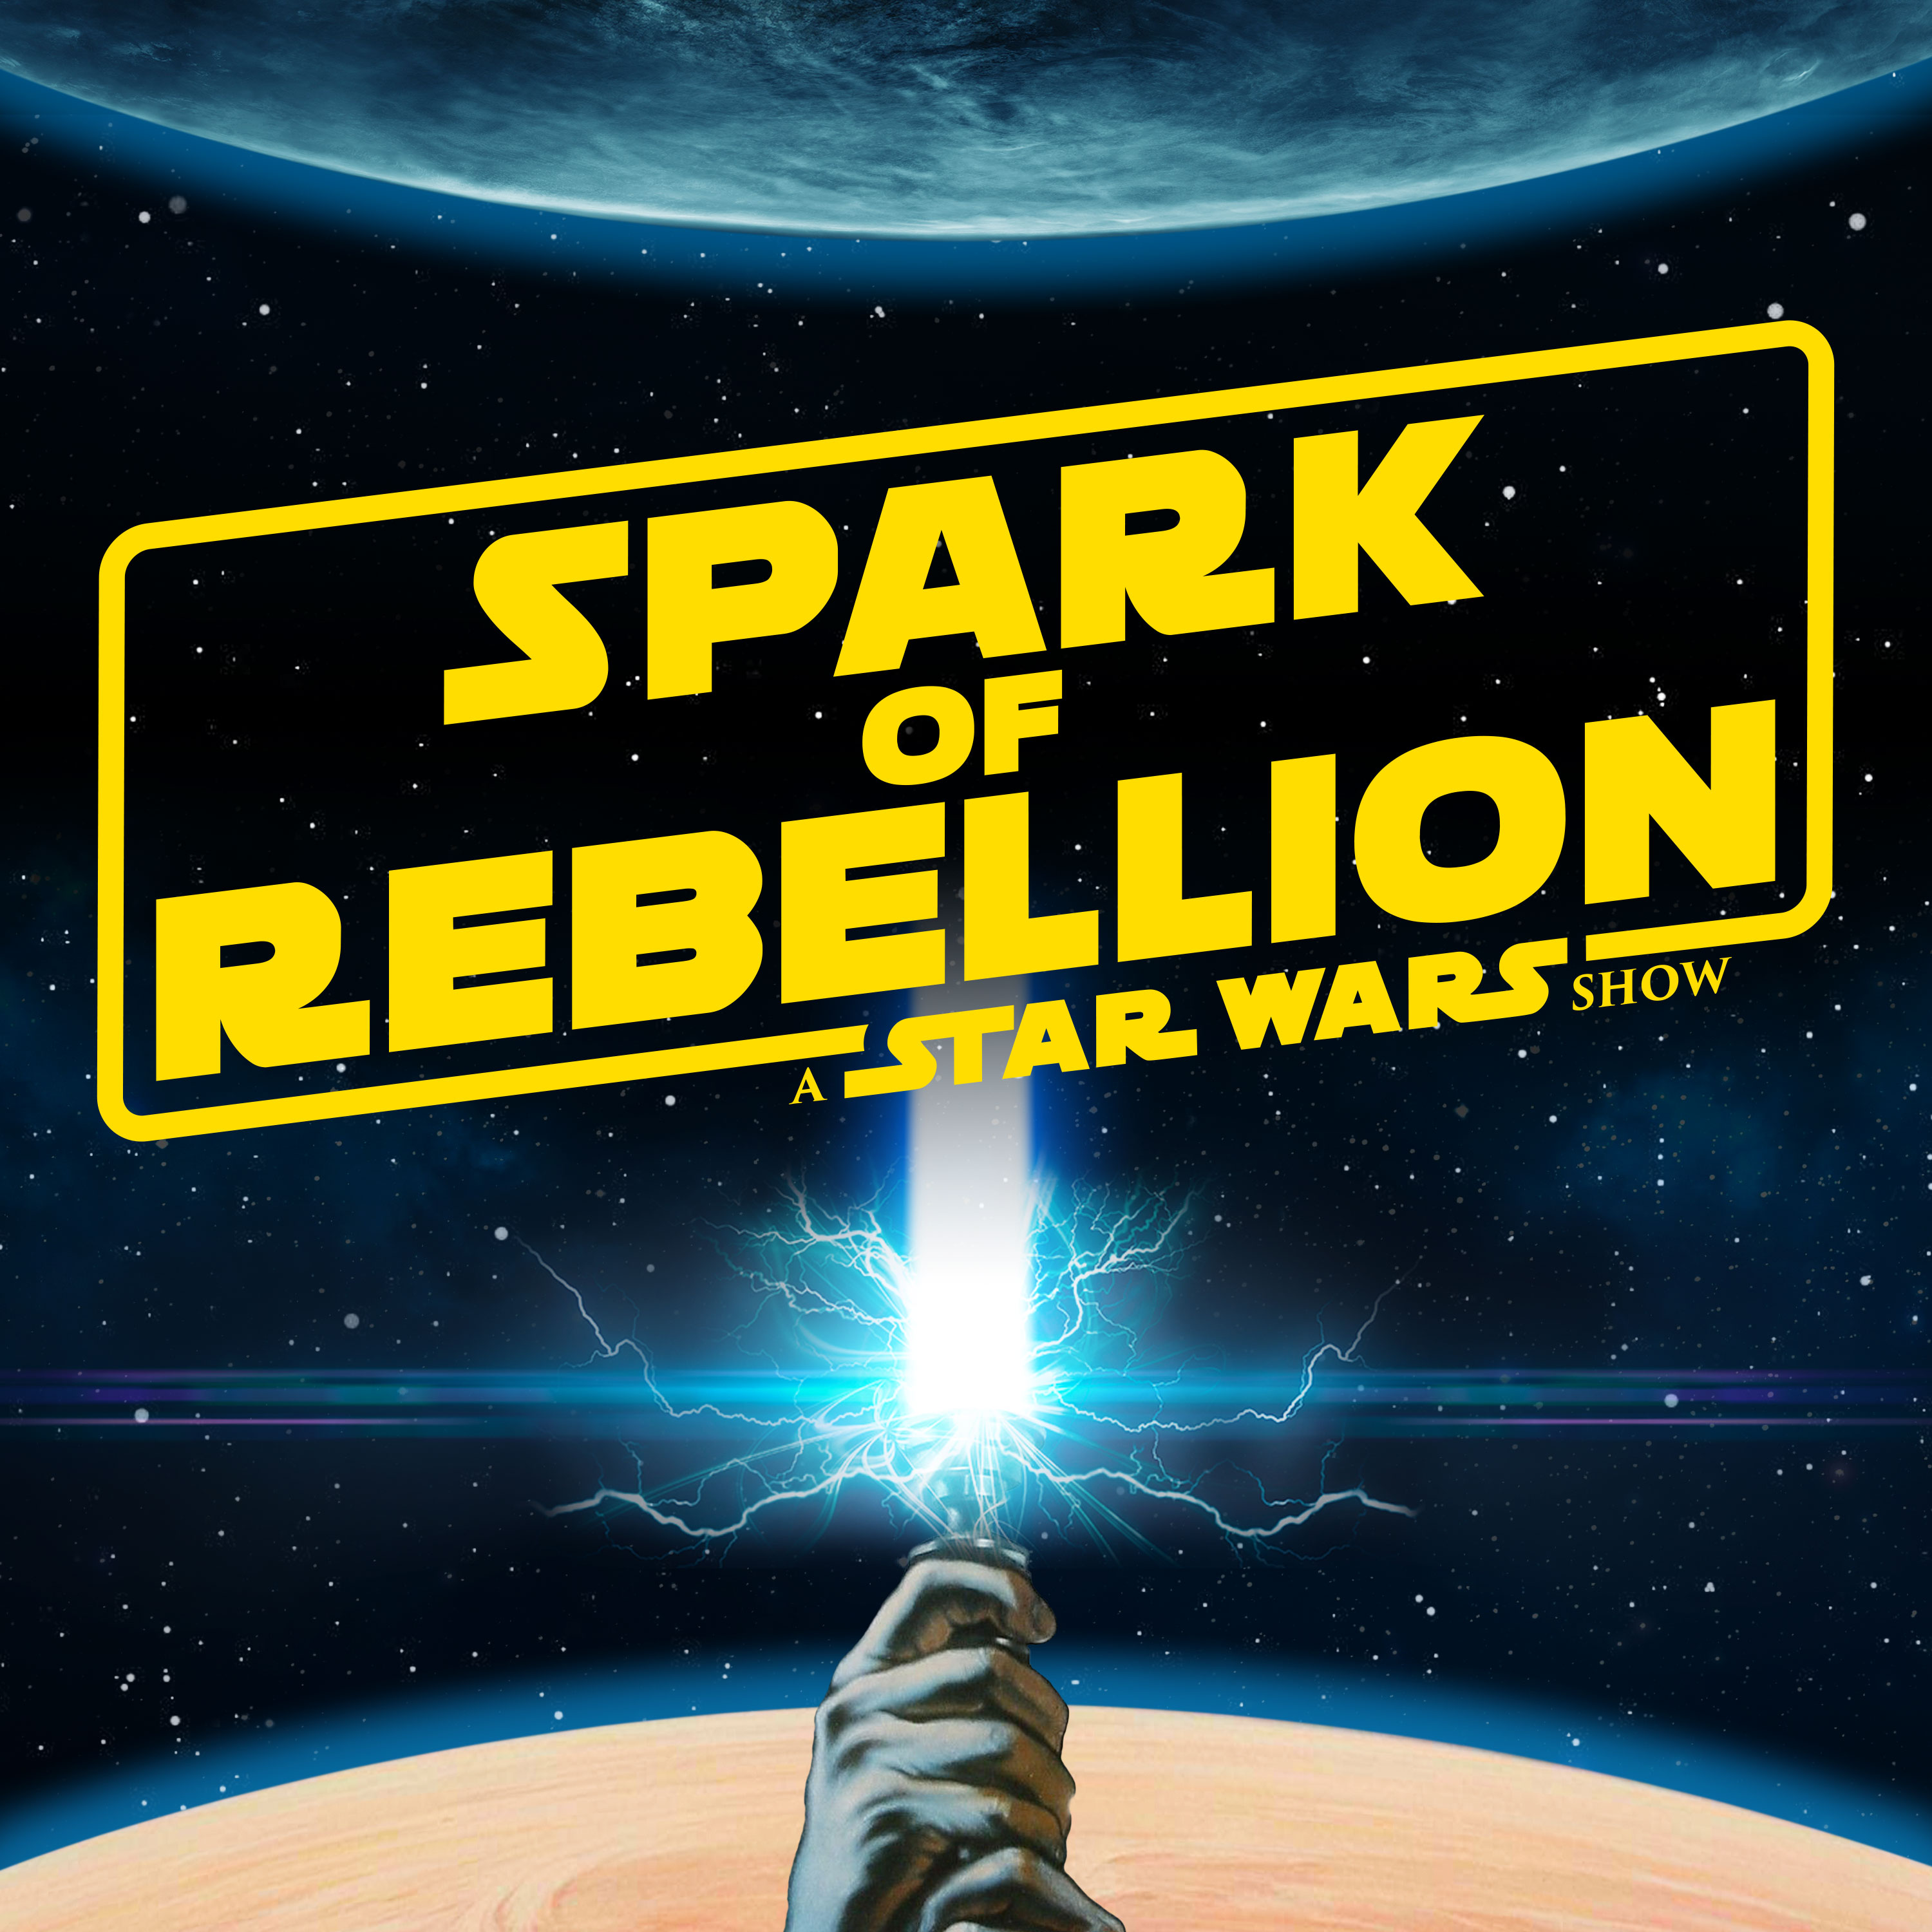 Artwork for Spark of Rebellion, A Star Wars Show